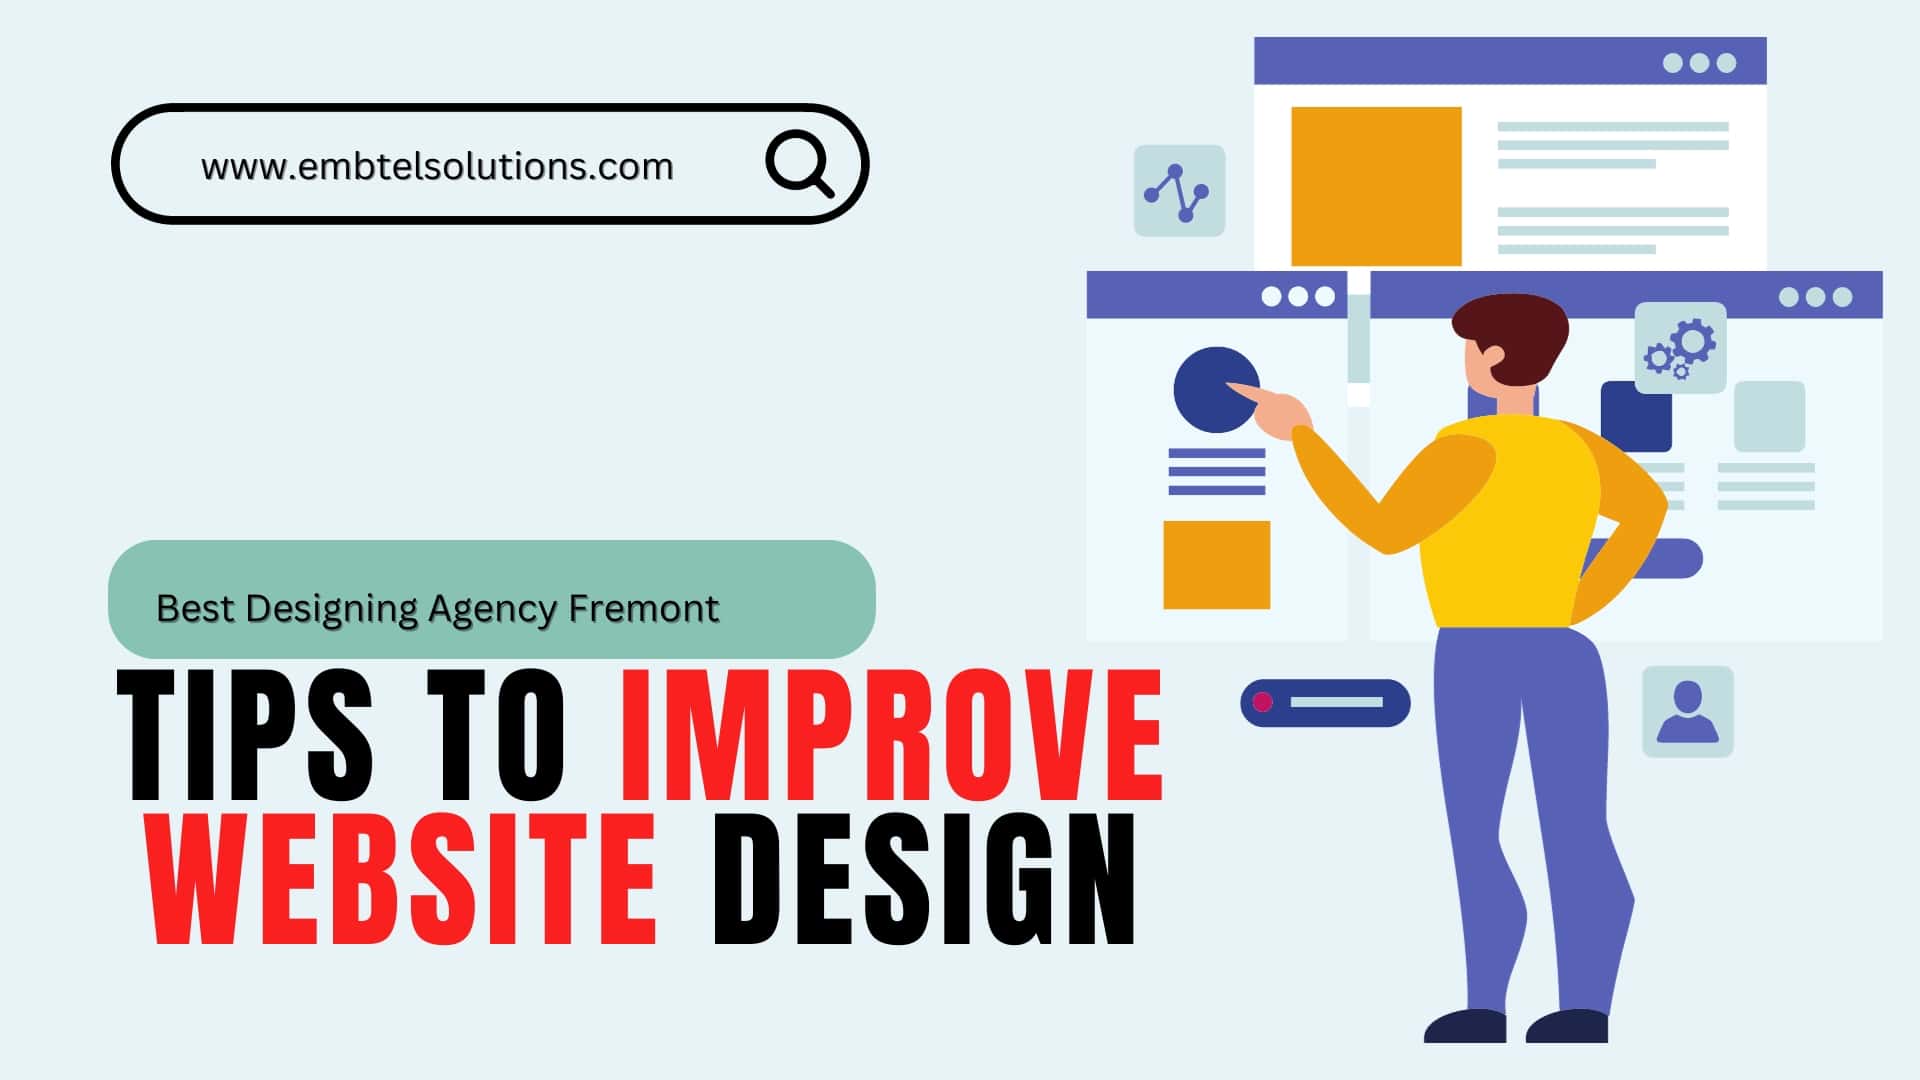 Tips to Improve Website Design